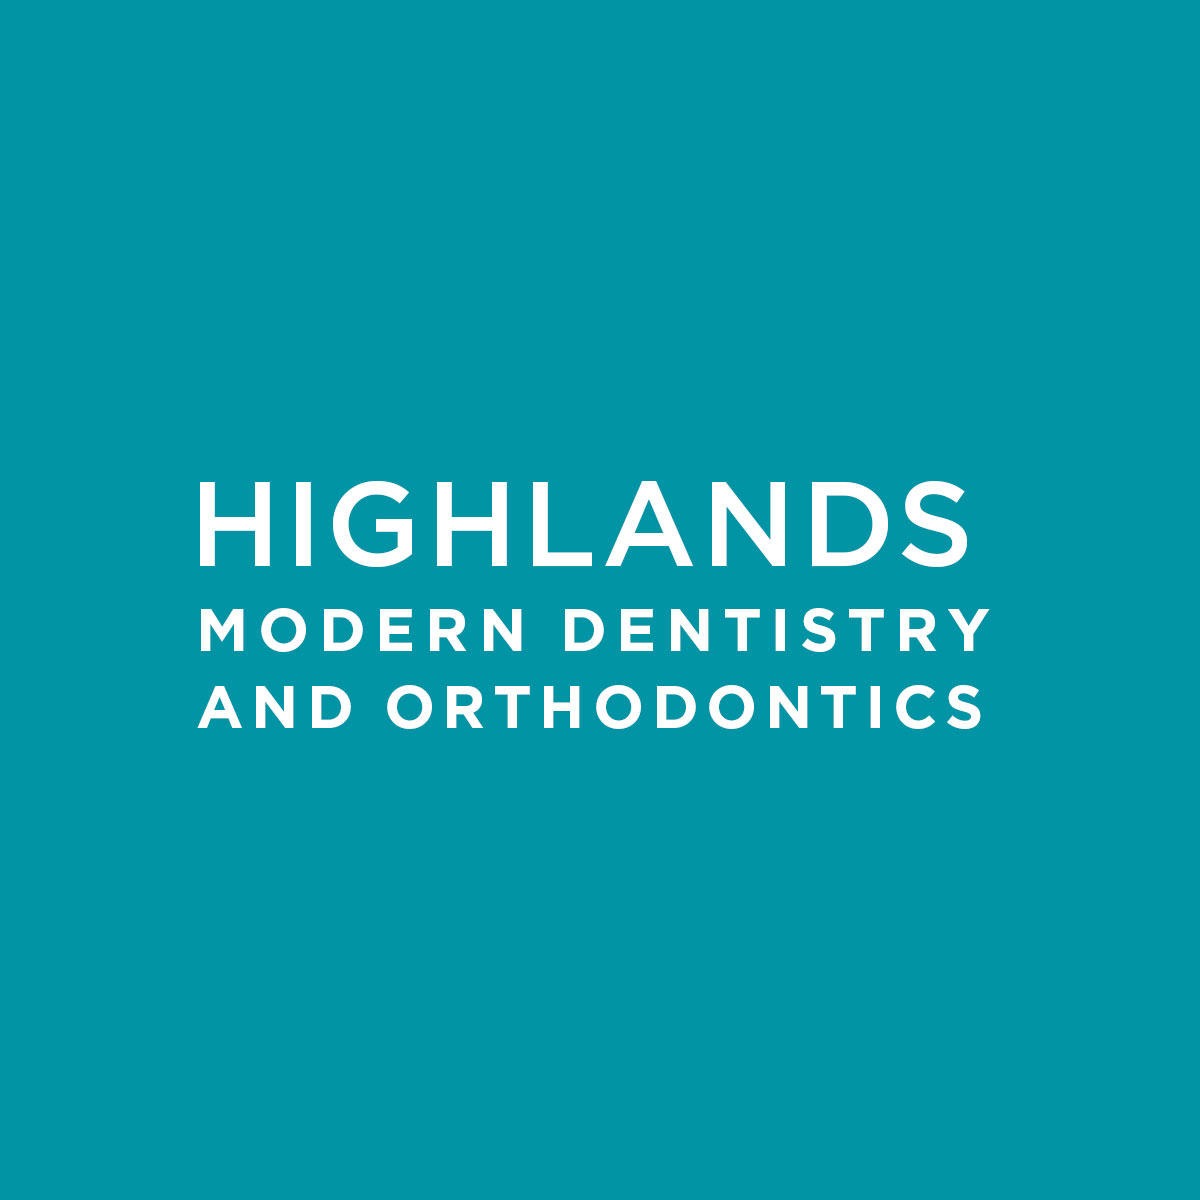 Highlands Modern Dentistry and Orthodontics